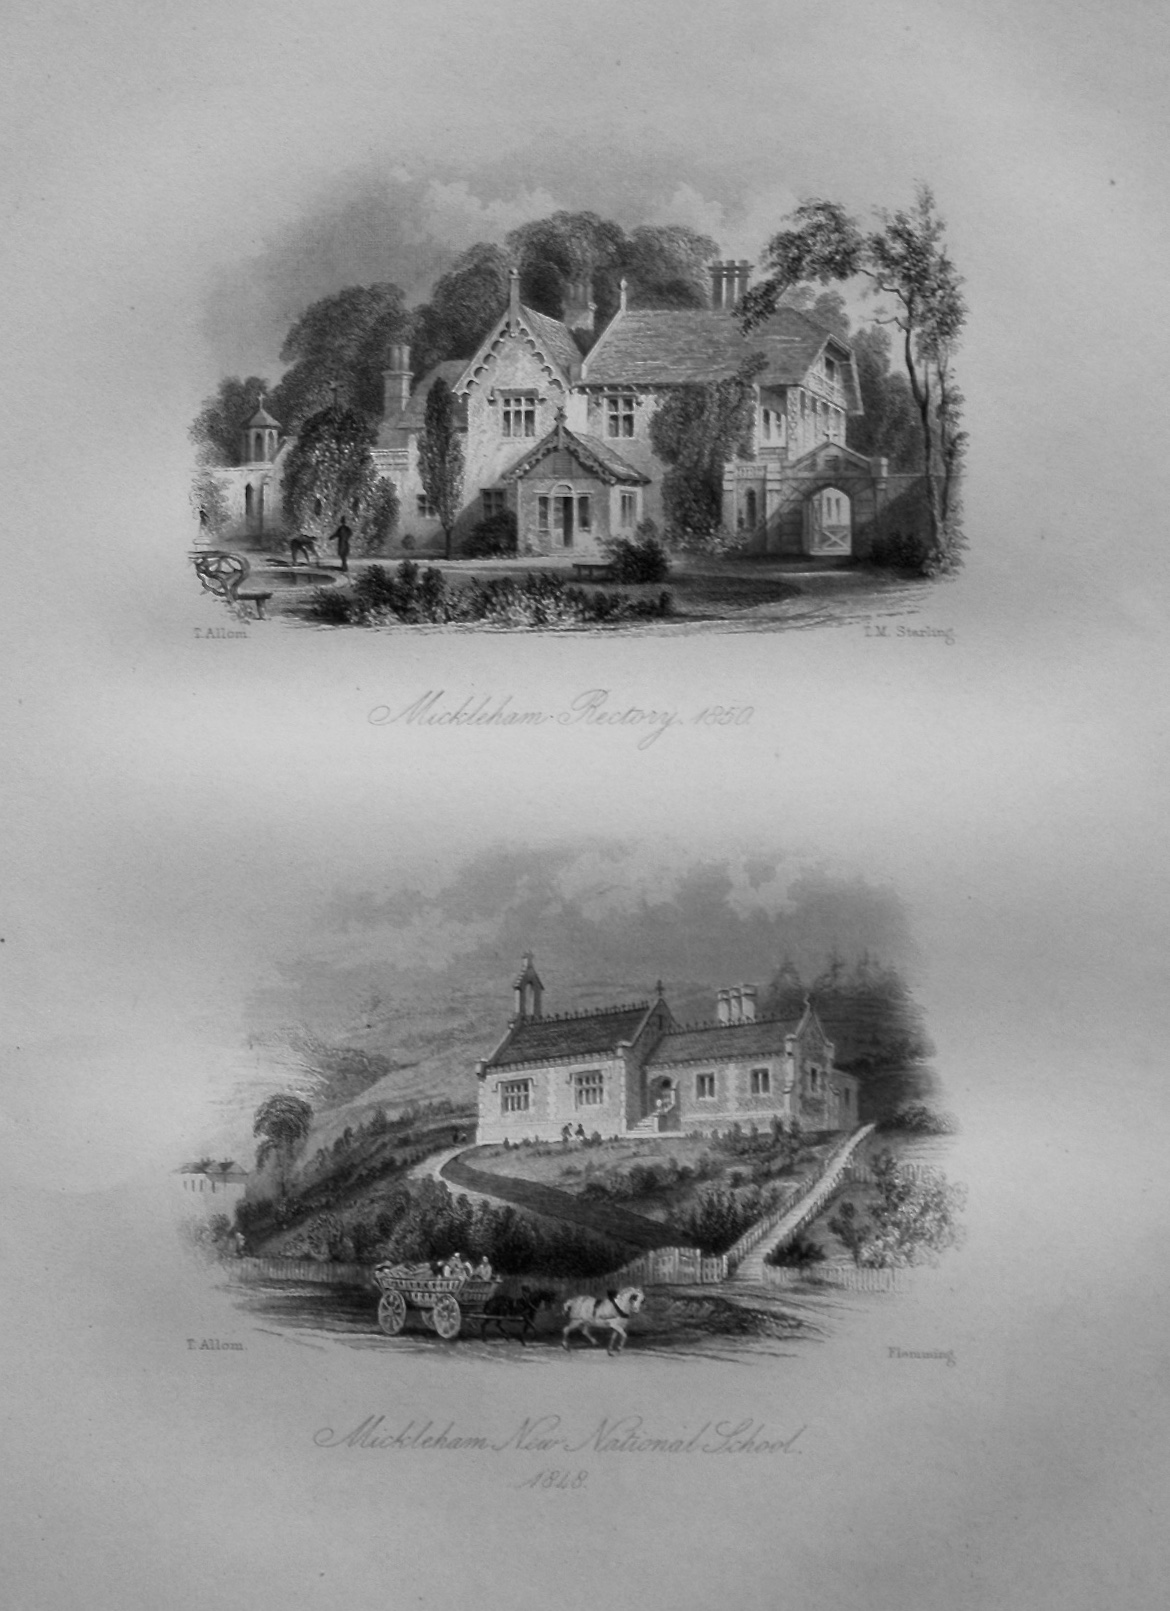 Mickleham Rectory 1850. and Mickleham new National School. 1848.